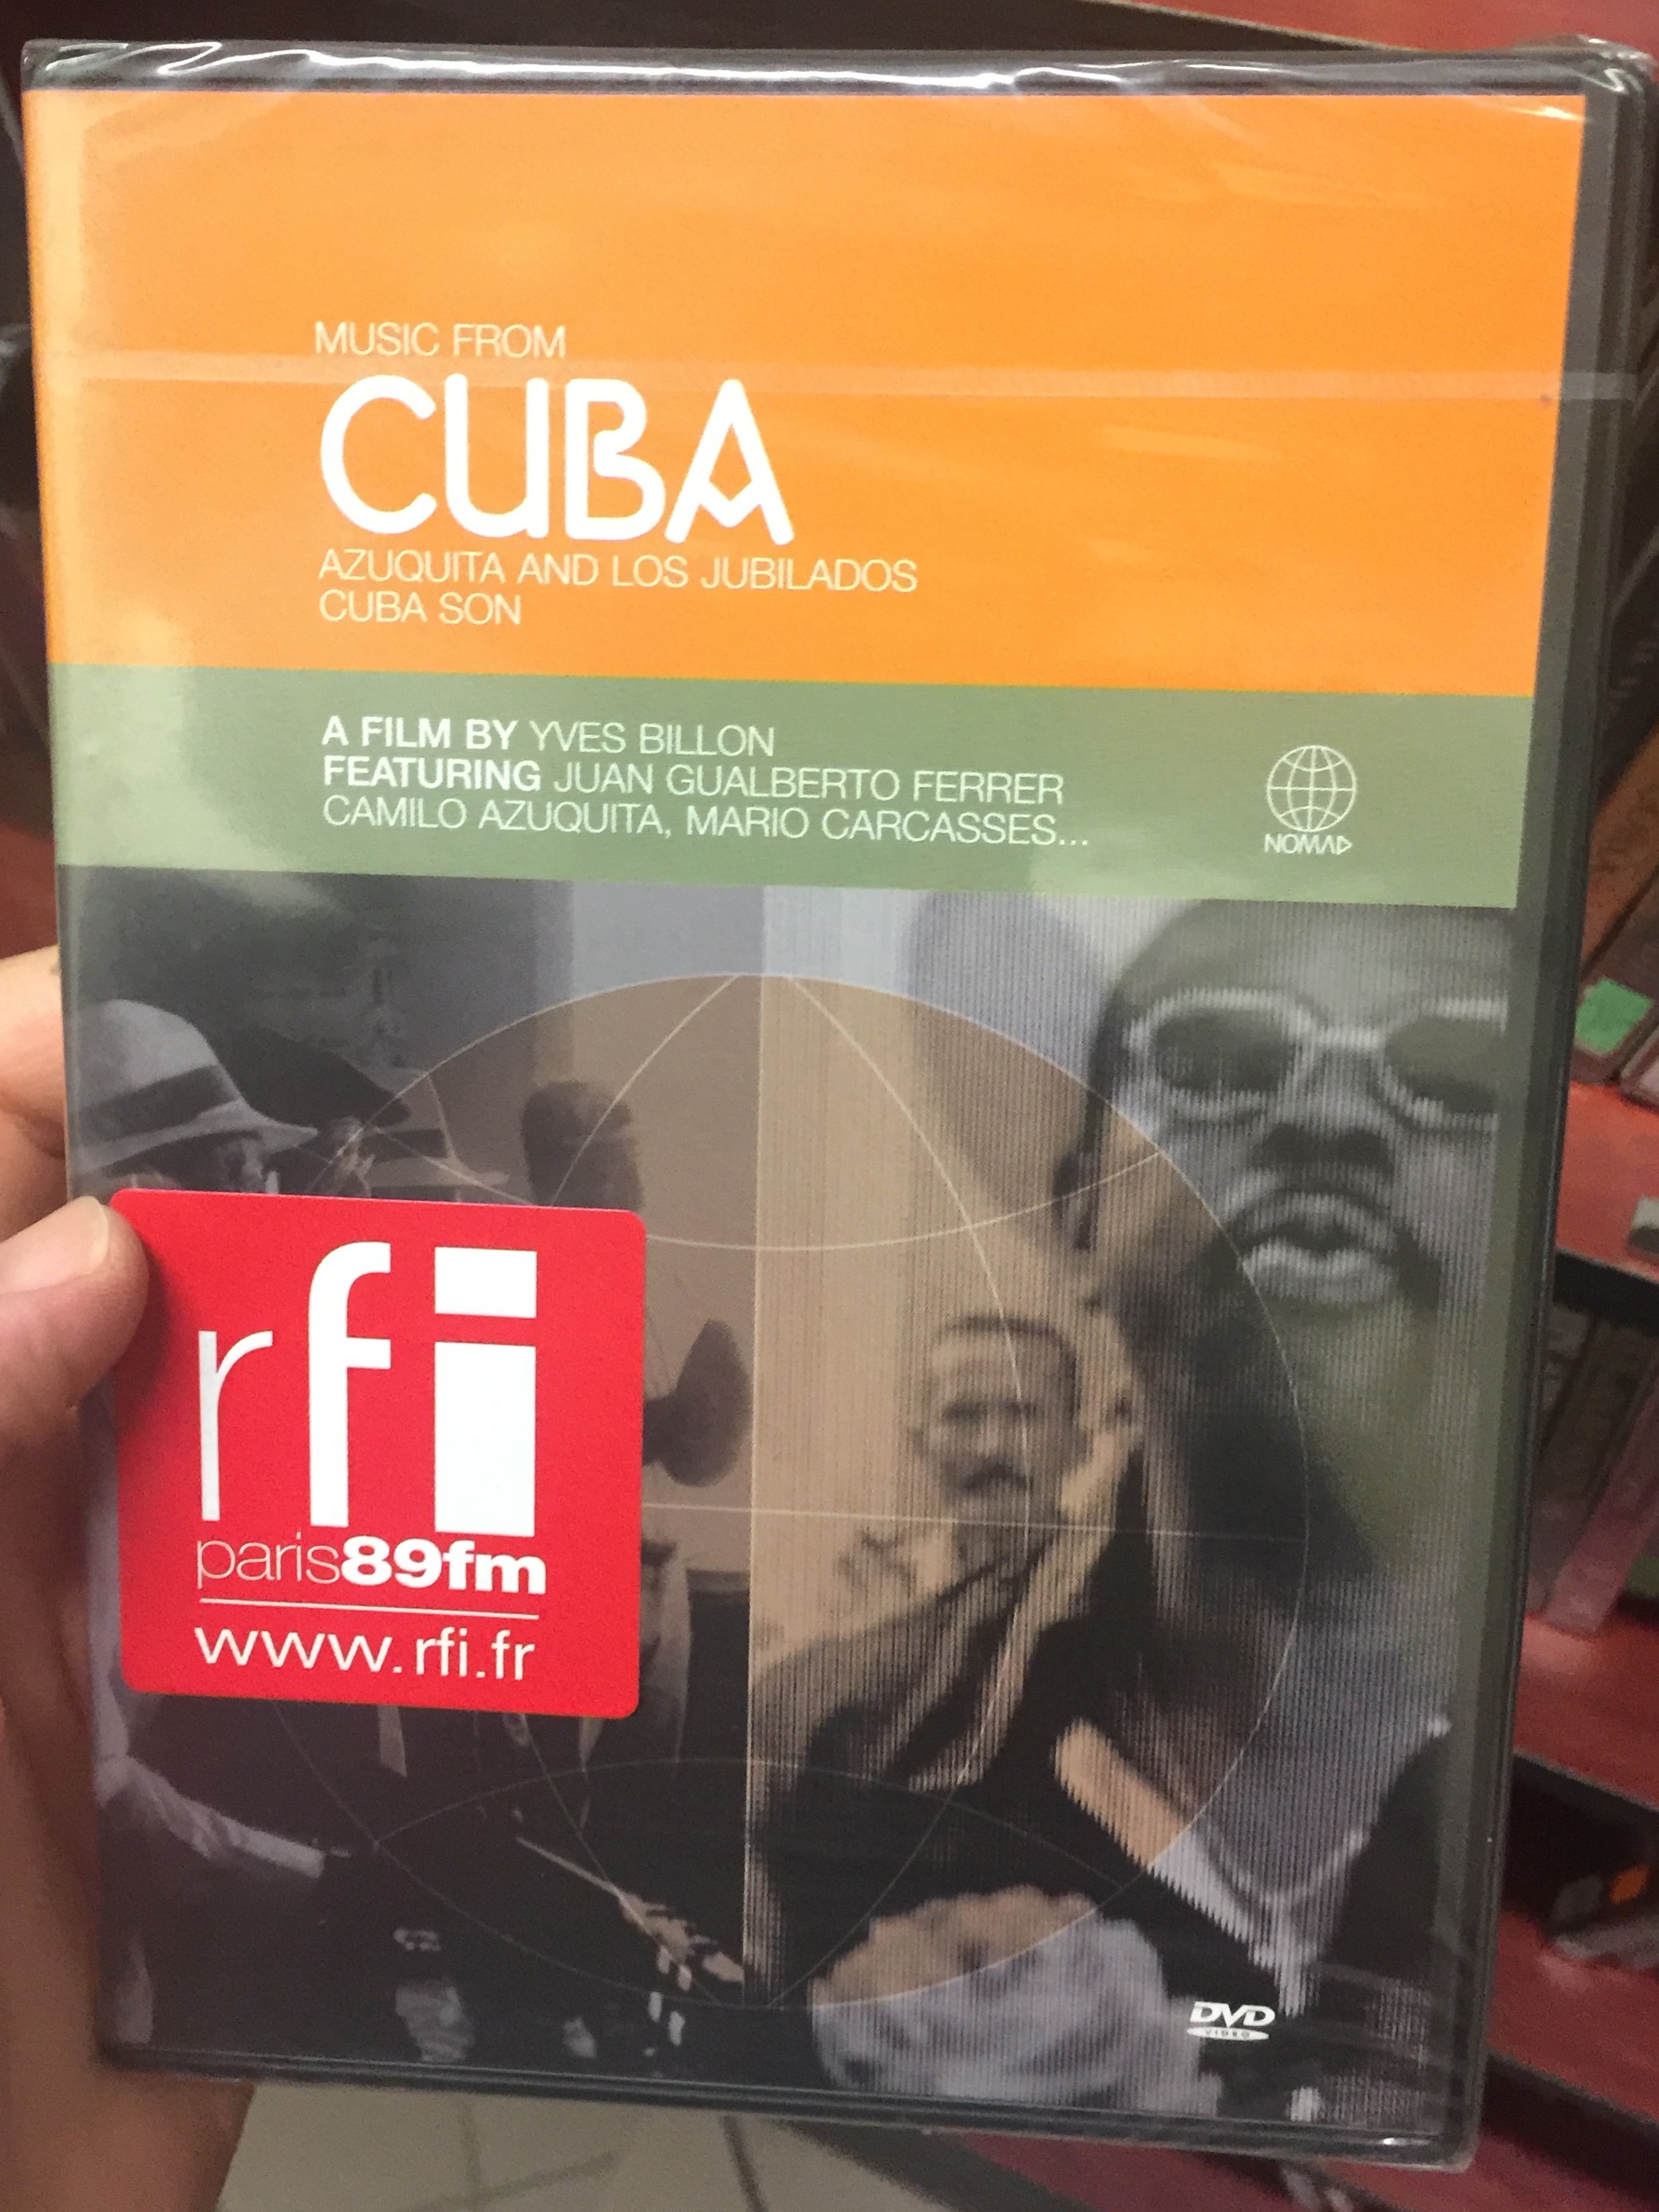 Music from Cuba DVD 2001 Azuquita and Los Jubilados Cuba son / A film by  Yves Billon / Featuring Juan Gualberto Ferrer, Camilo, Azuquita, Mario  Carcasses / Musique de Cuba - bibleinmylanguage